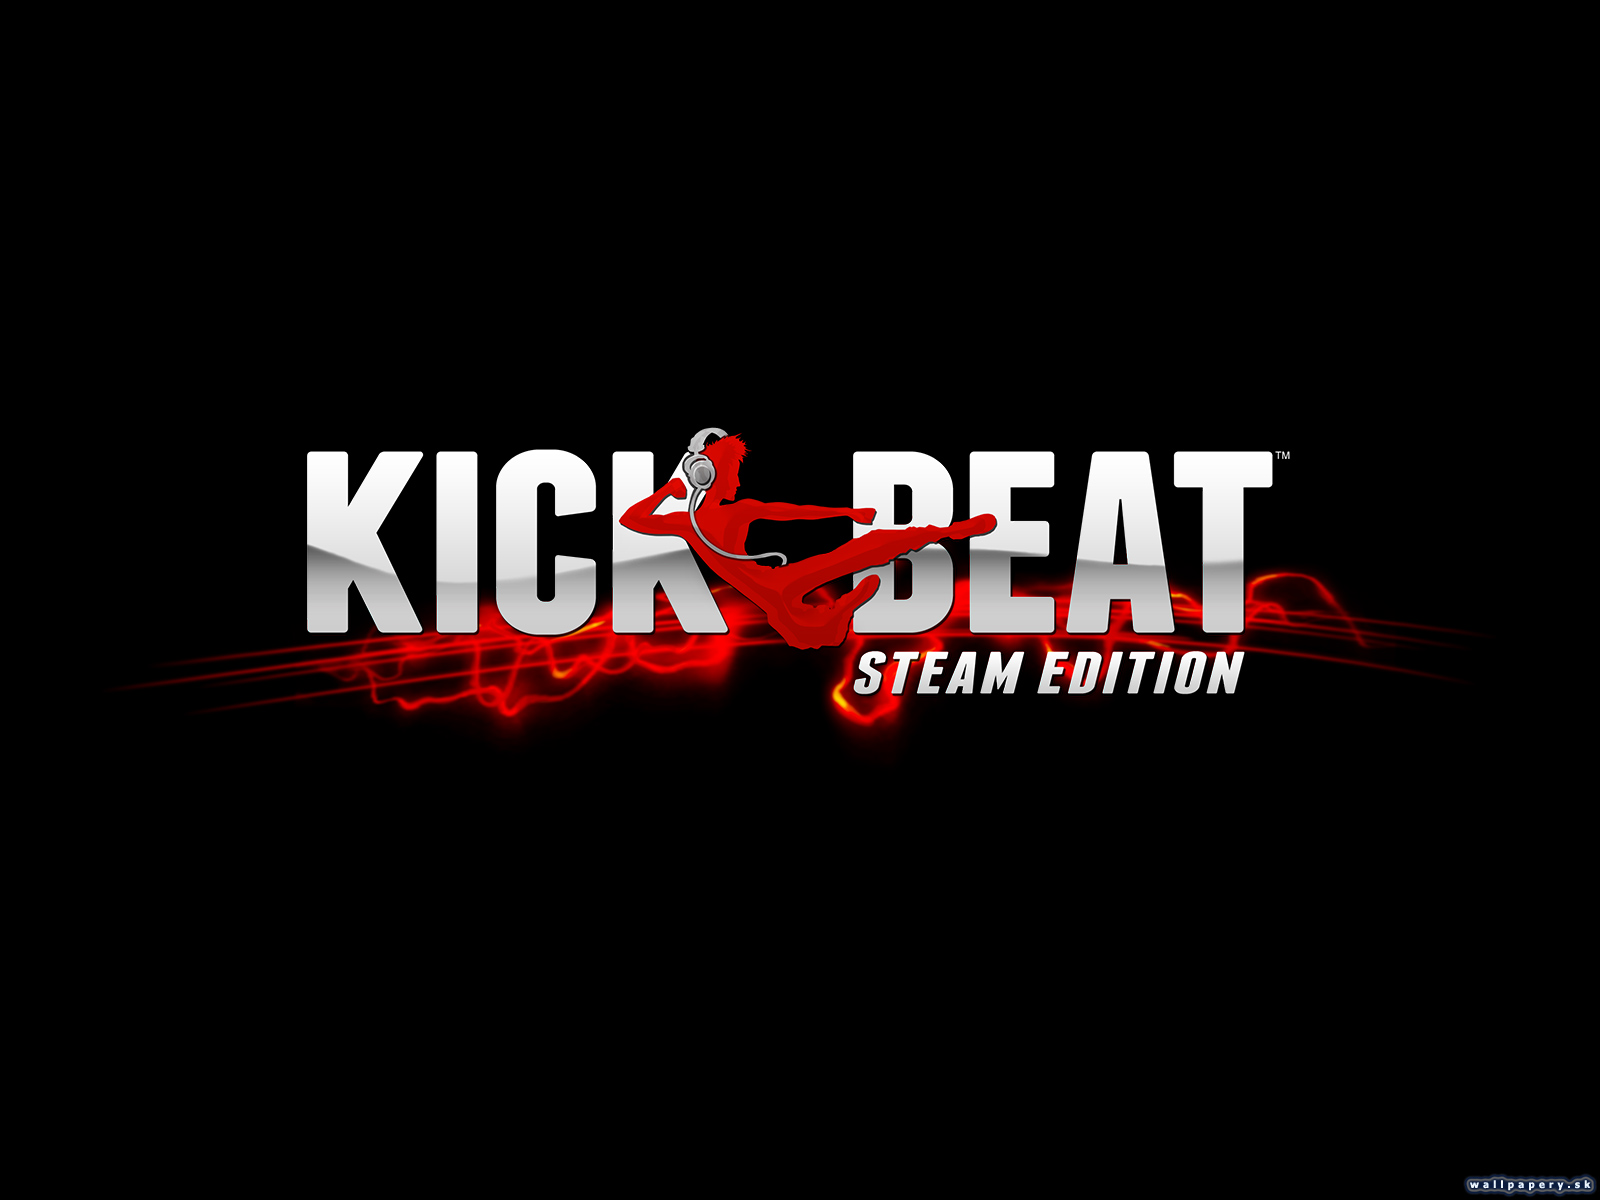 KickBeat - wallpaper 22